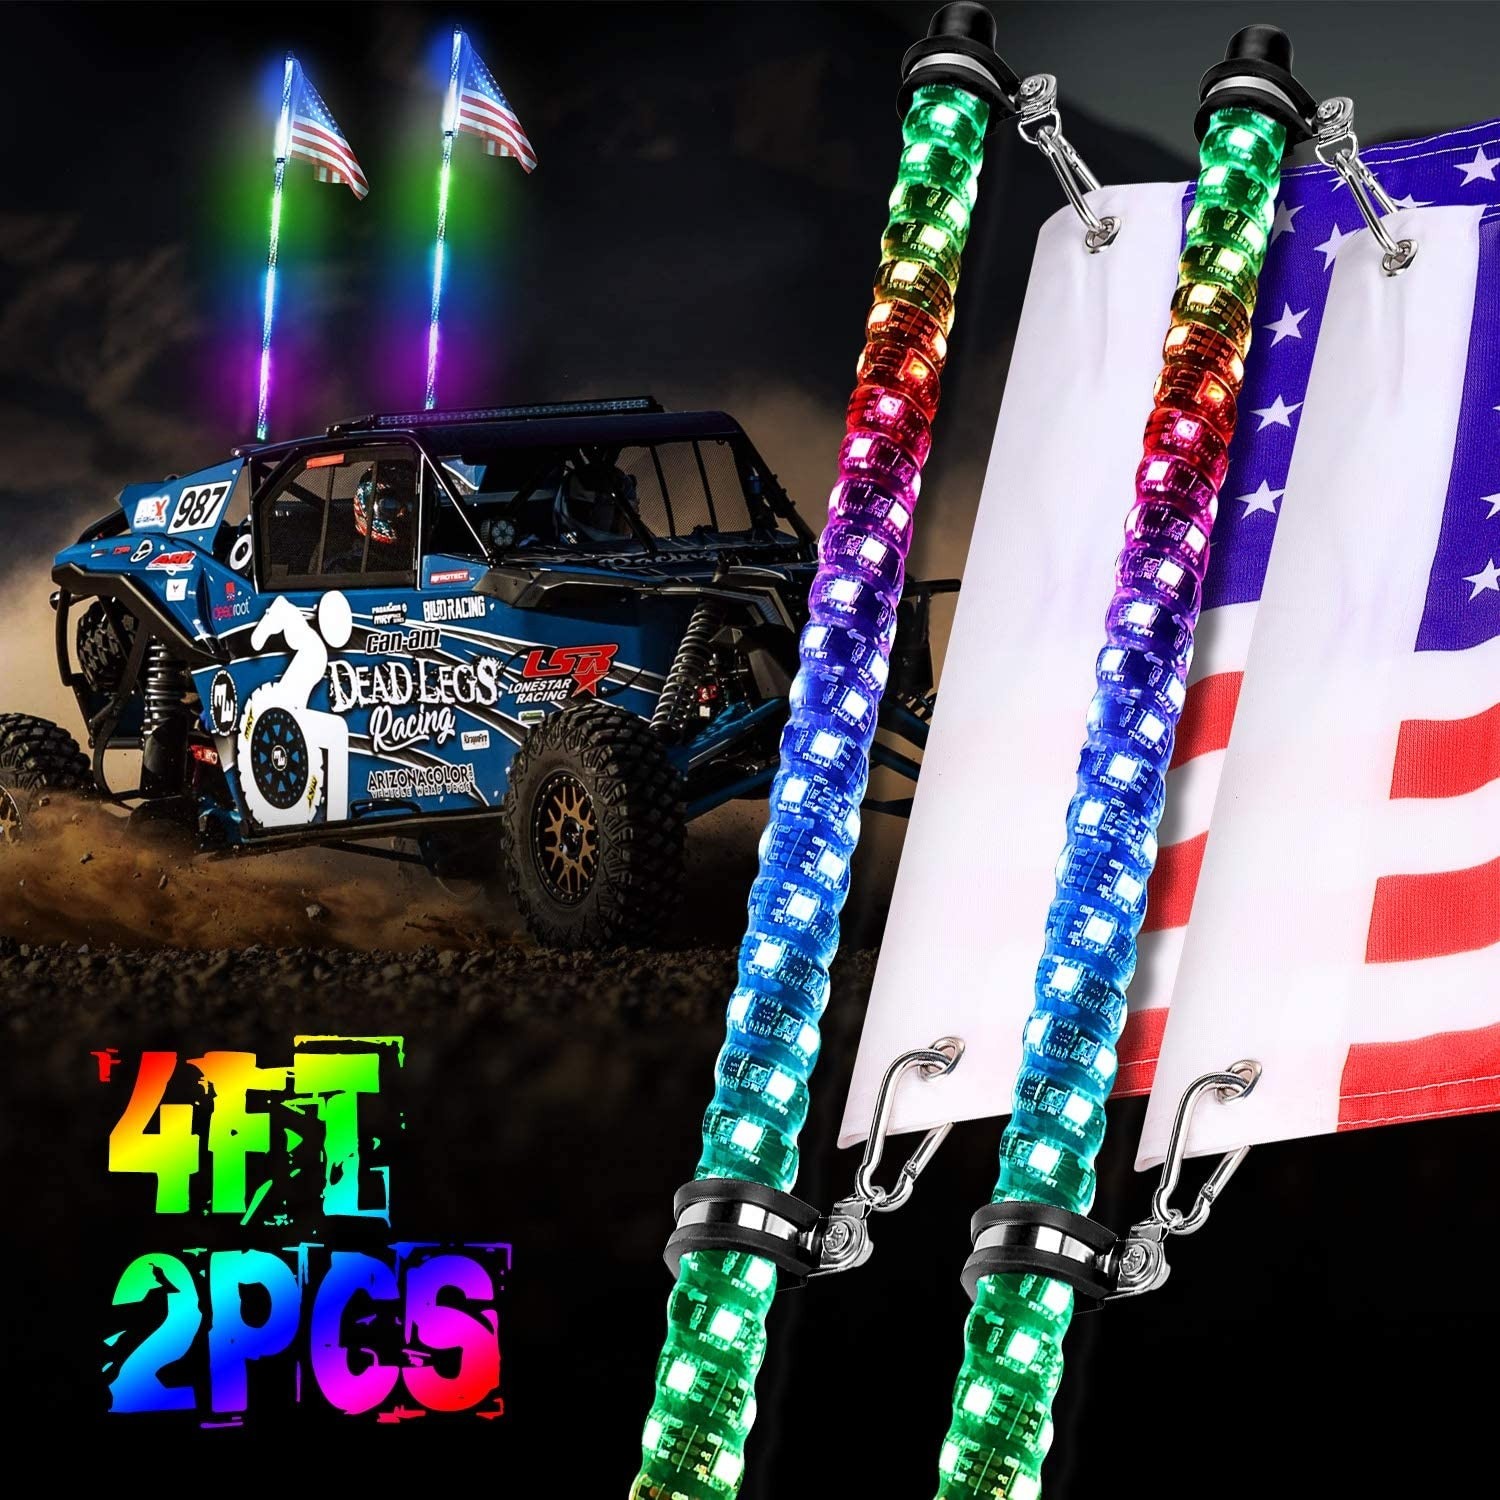 DJI 4X4 2Pack 4FT Lighted Whips Bluetooth Spiral Dancing/Chasing Light LED Antenna Whips for ATV UTV RZR Polaris Off Road Jeep Trucks 4x4 Buggy Dune LED Whip Lights 